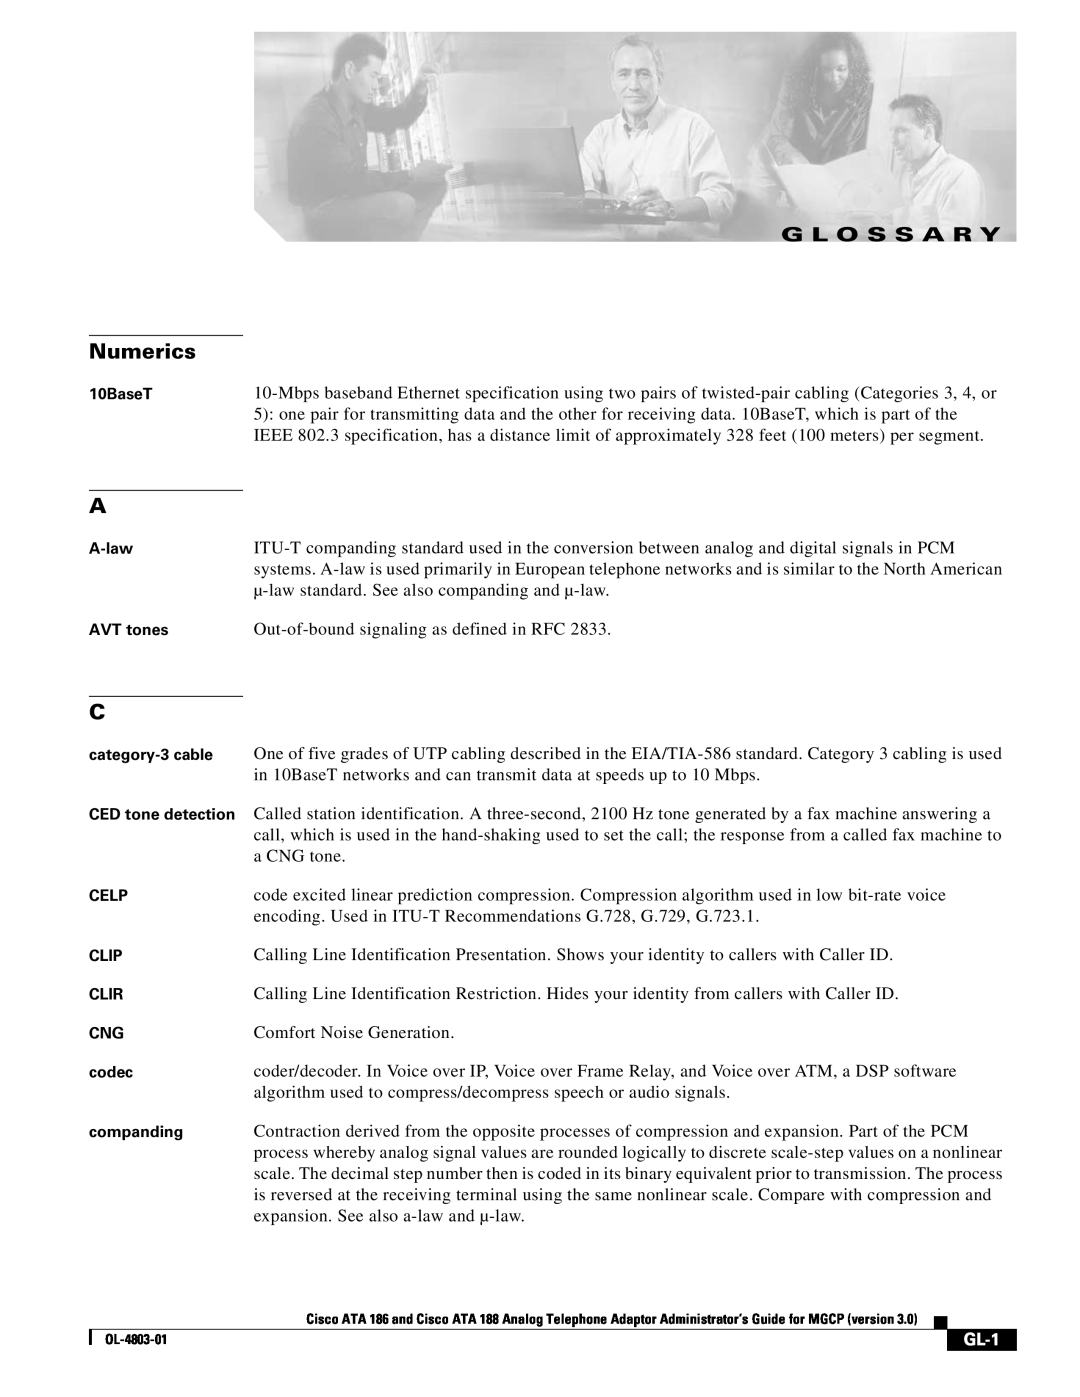 Cisco Systems ATA 186 manual Numerics, G L O S S A R Y, GL-1 